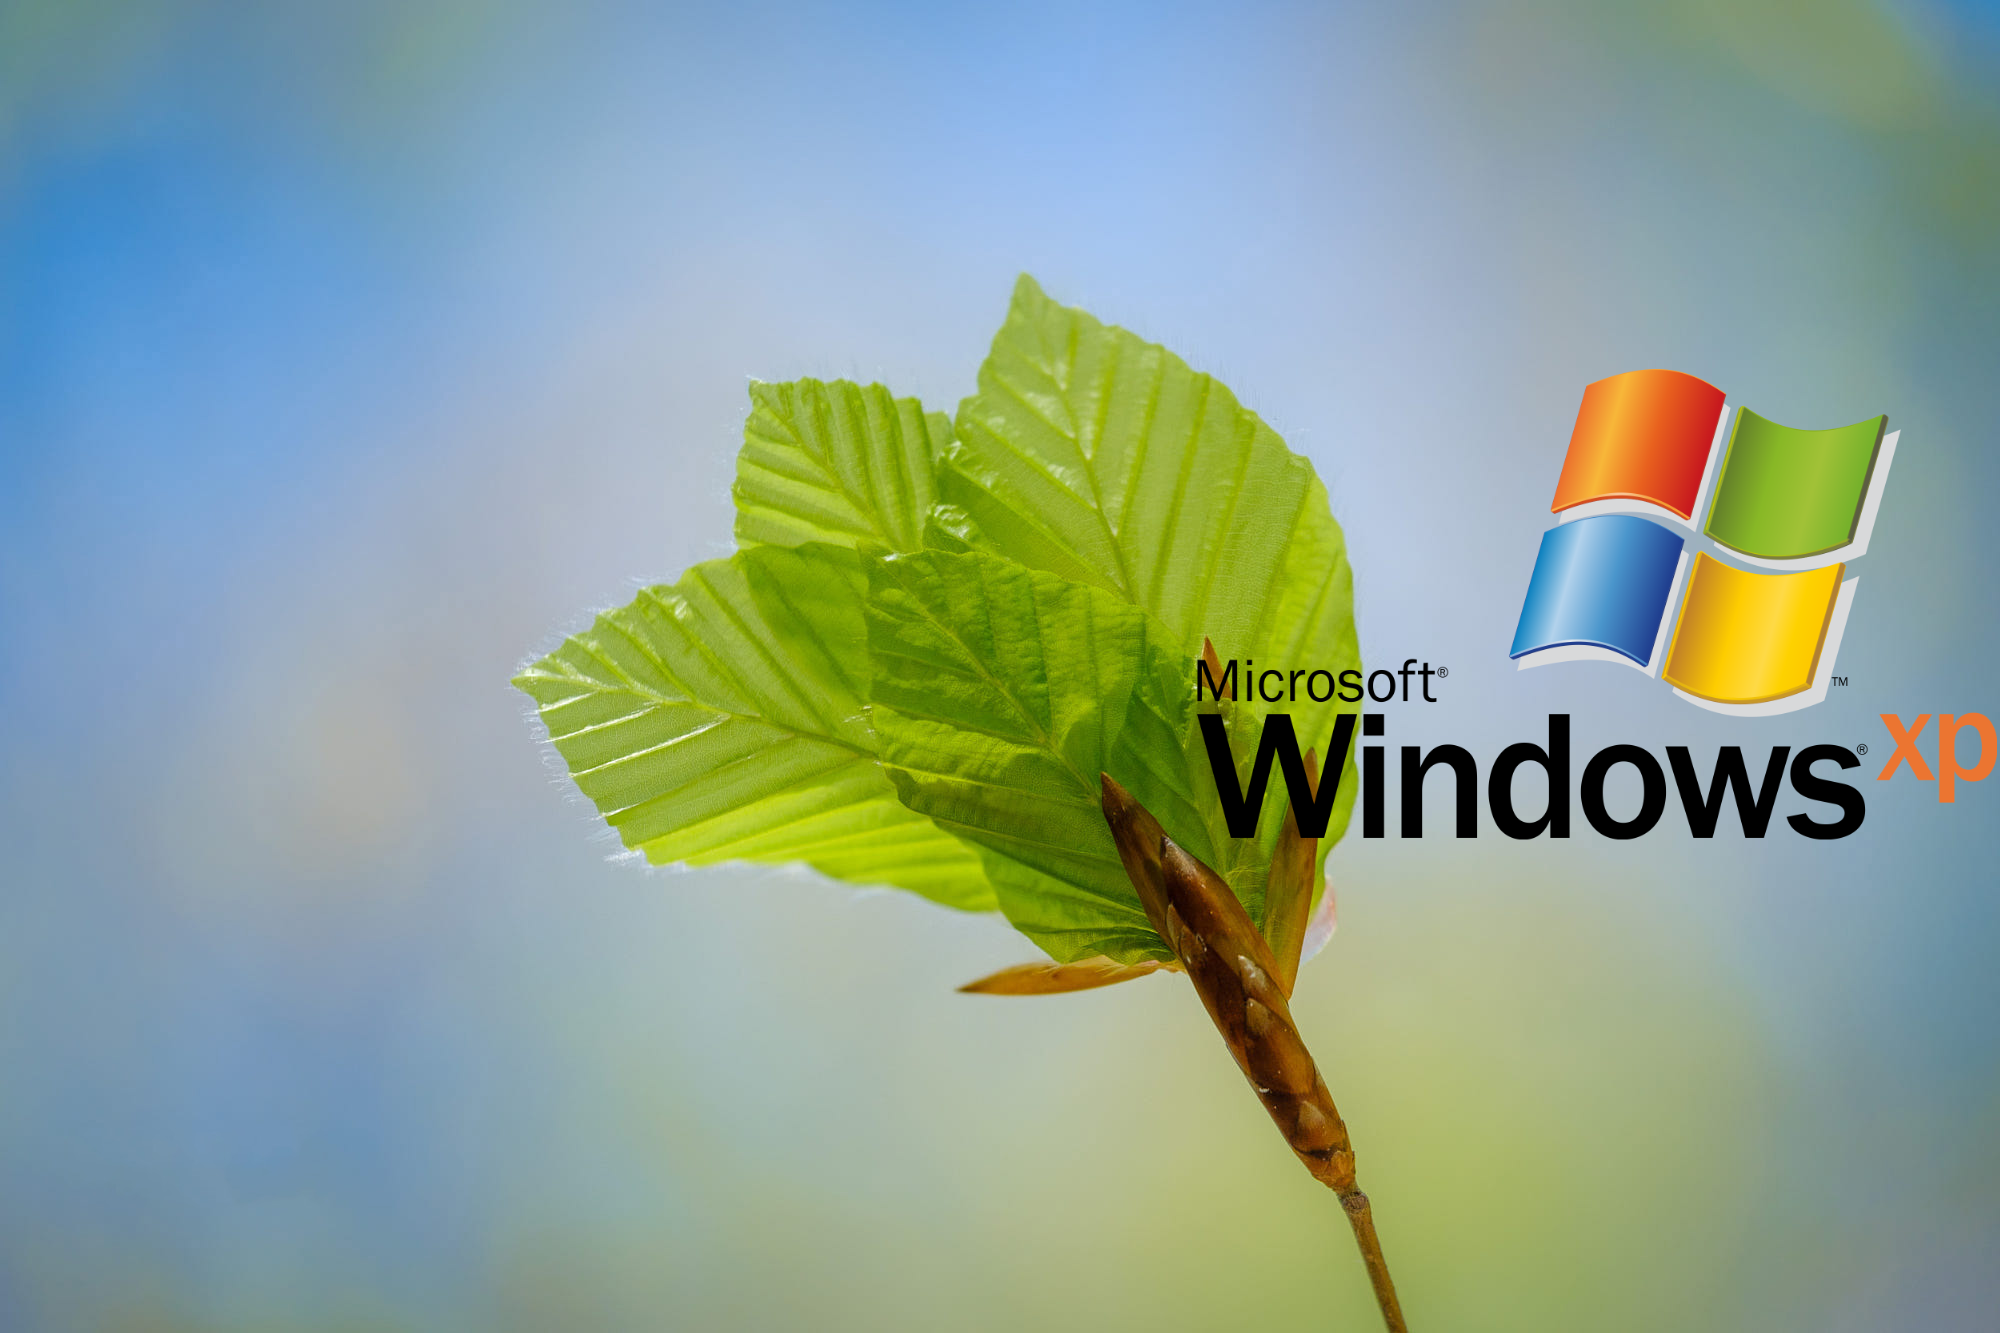 General 2000x1333 macro nature logo operating system Windows XP Microsoft Windows simple background windows logo